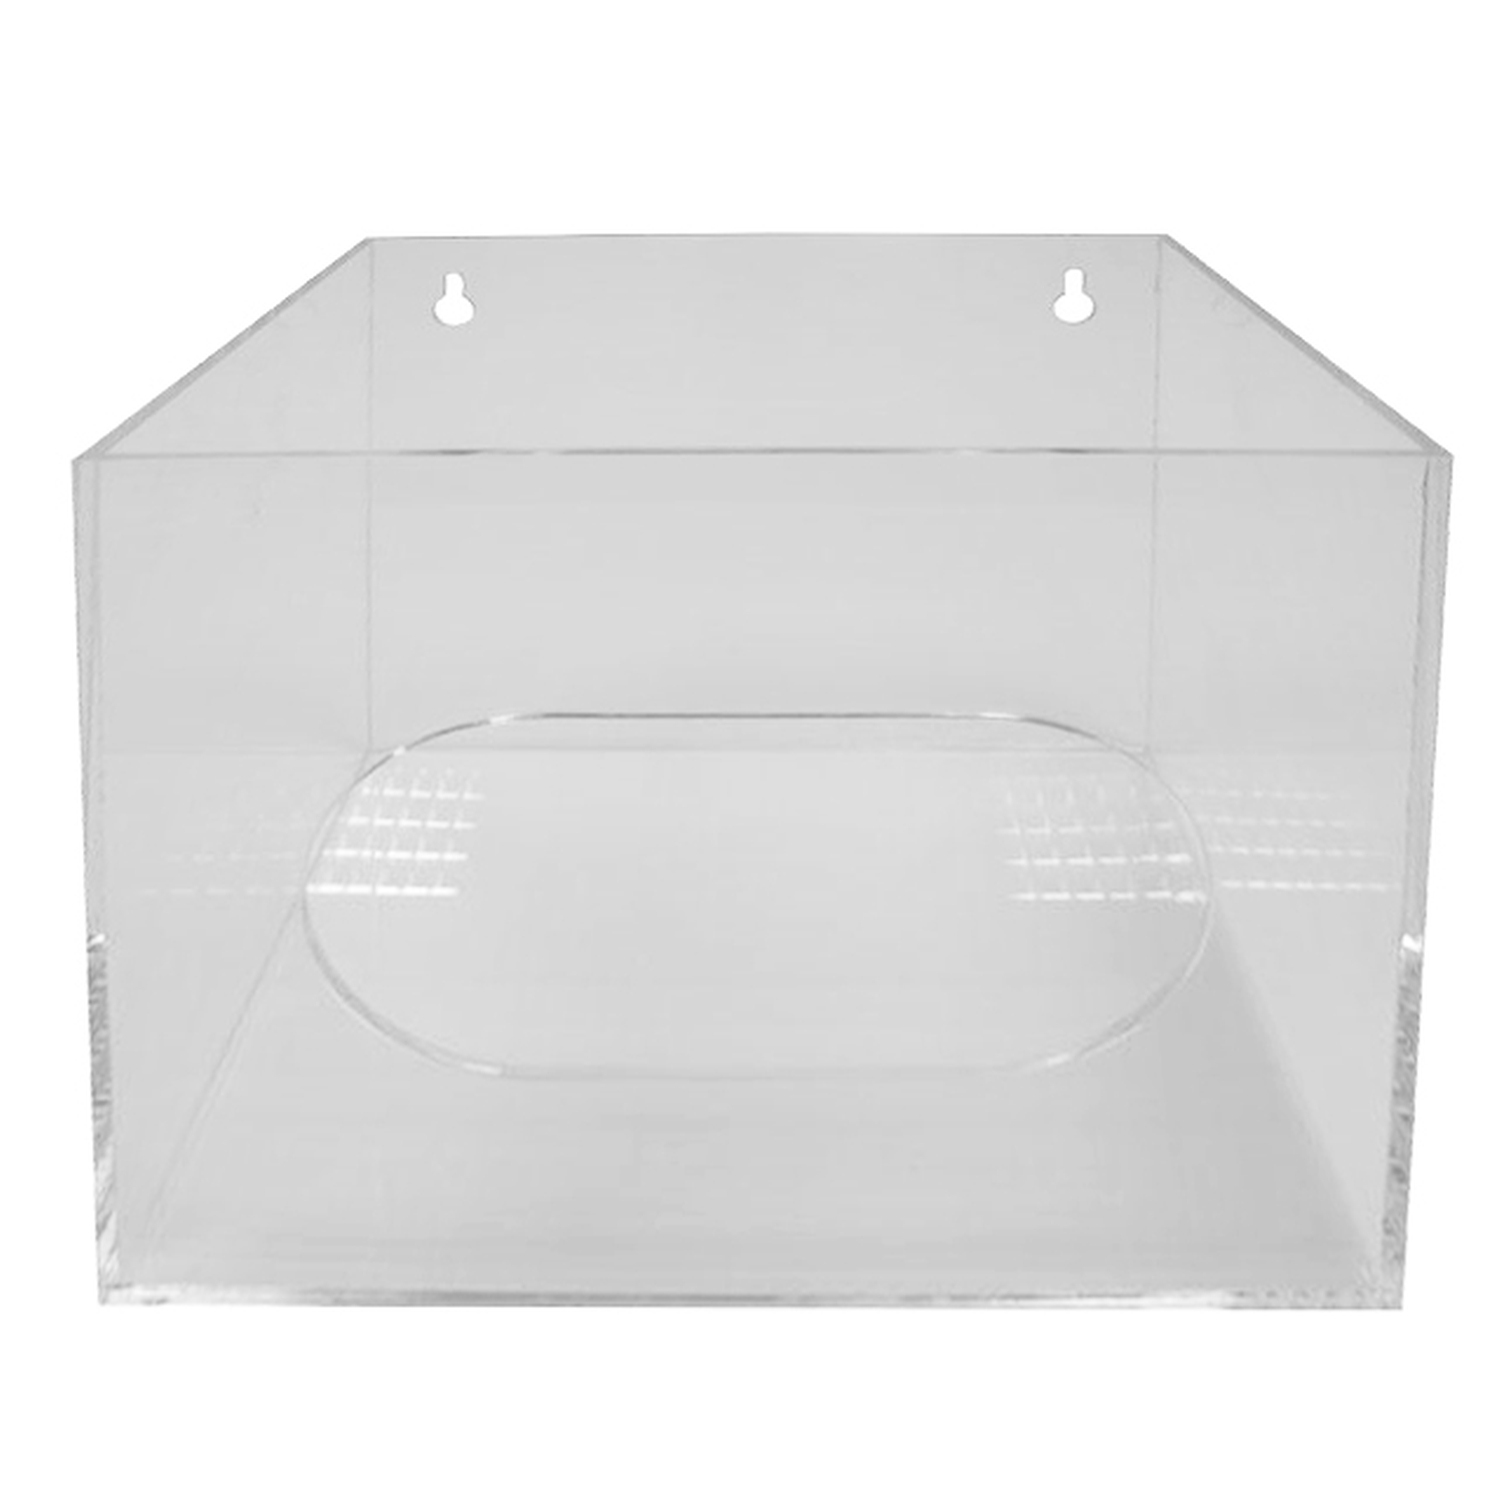 Universal-Spenderbox aus Acrylglas